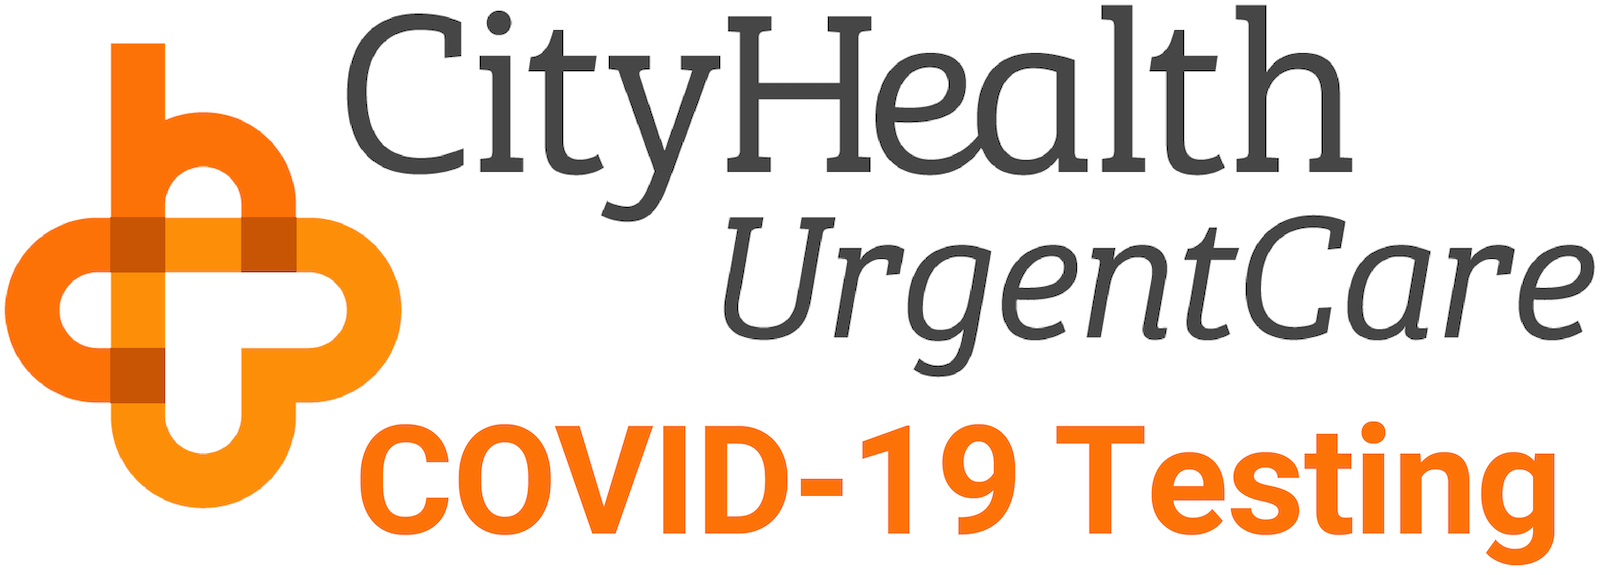 CityHealth Urgent Care - Sacramento Community Testing Logo